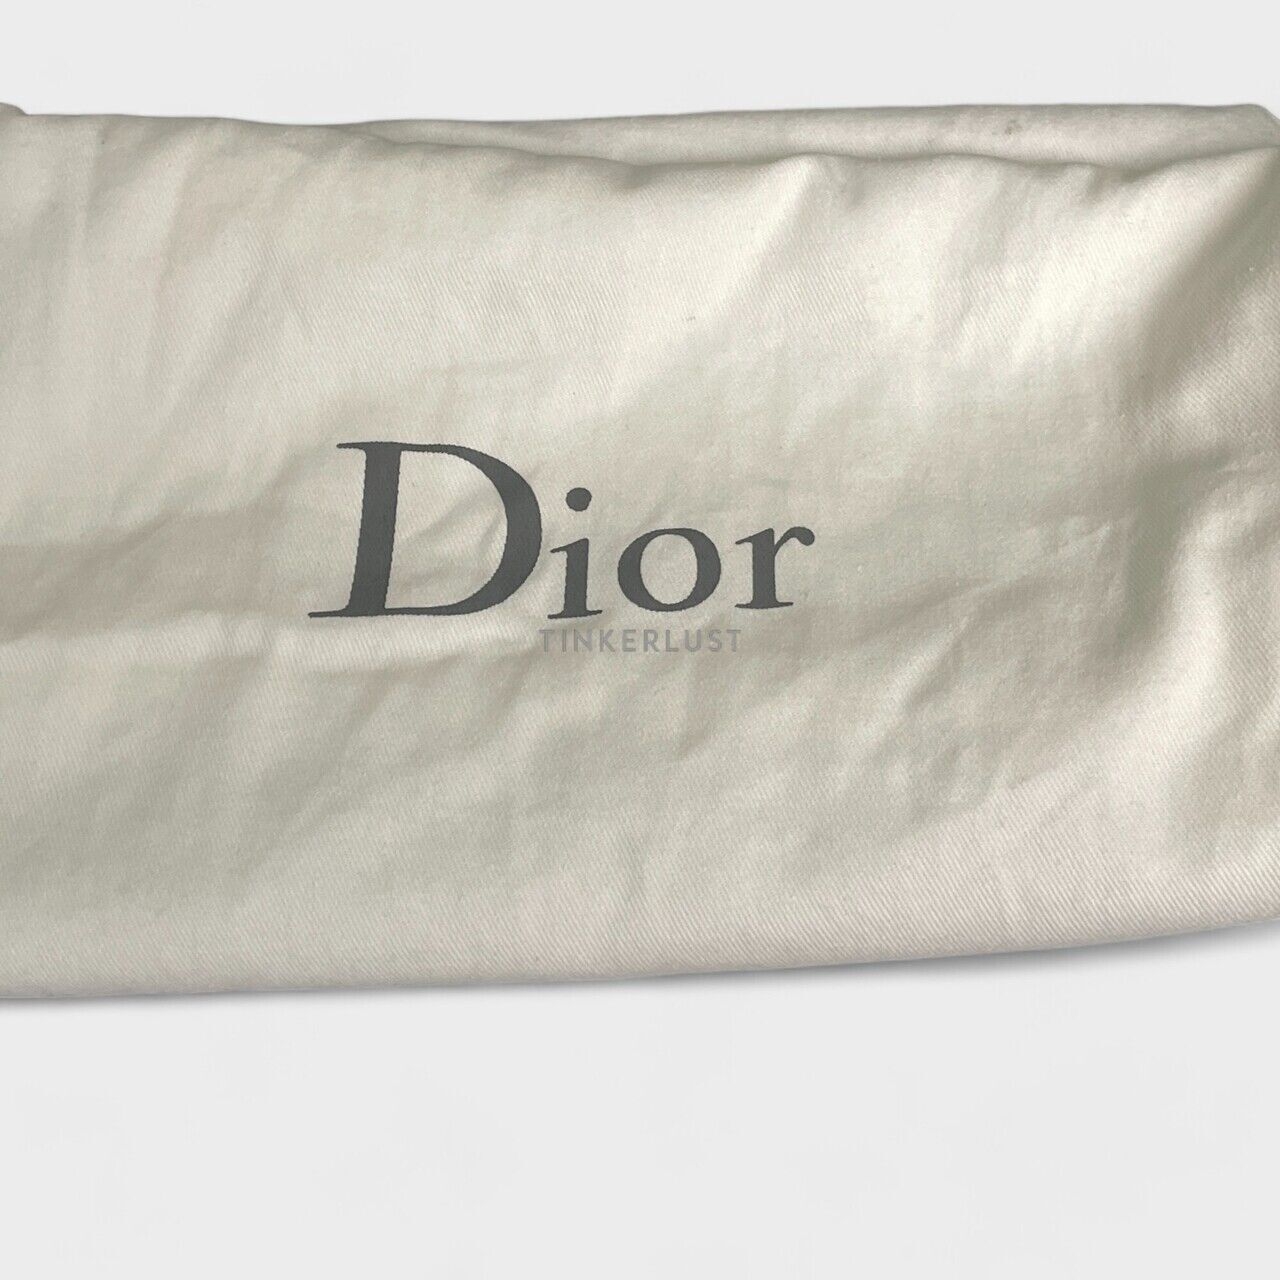 Christian Dior Lady Dior D-Lite Embroidered Multi Medium GHW